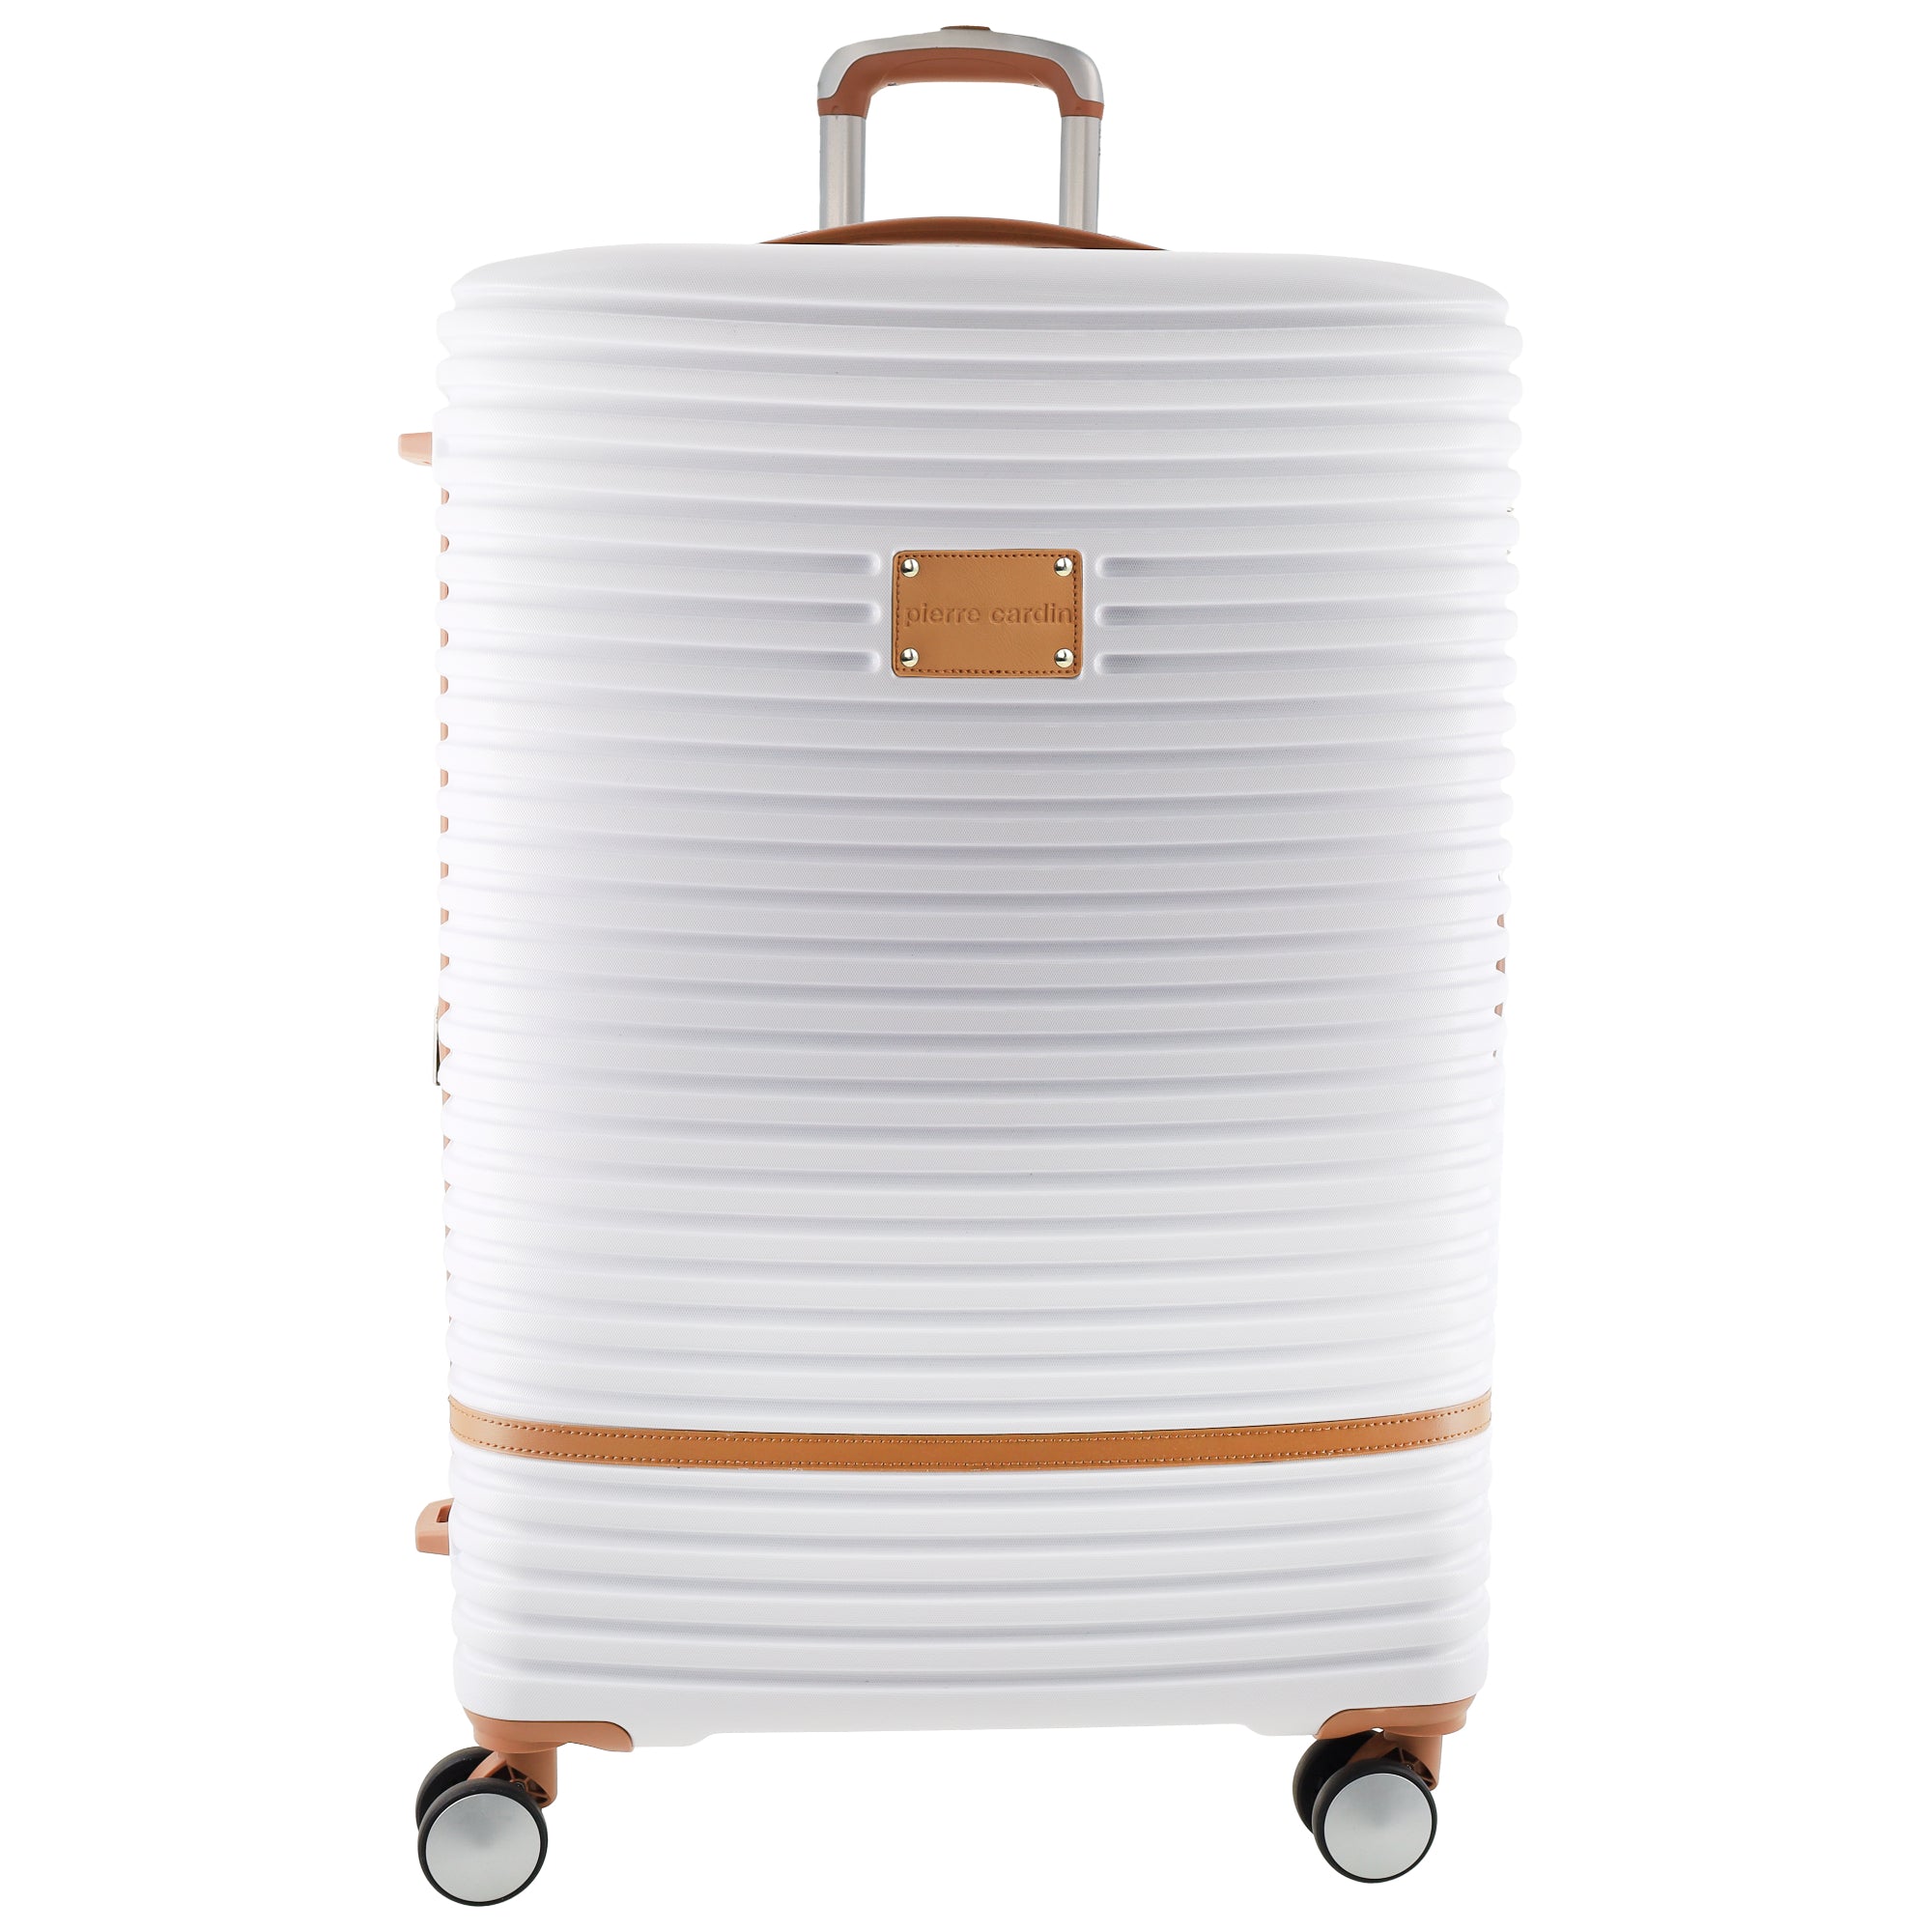 Pierre Cardin 70cm MEDIUM Hard Shell Suitcase in White